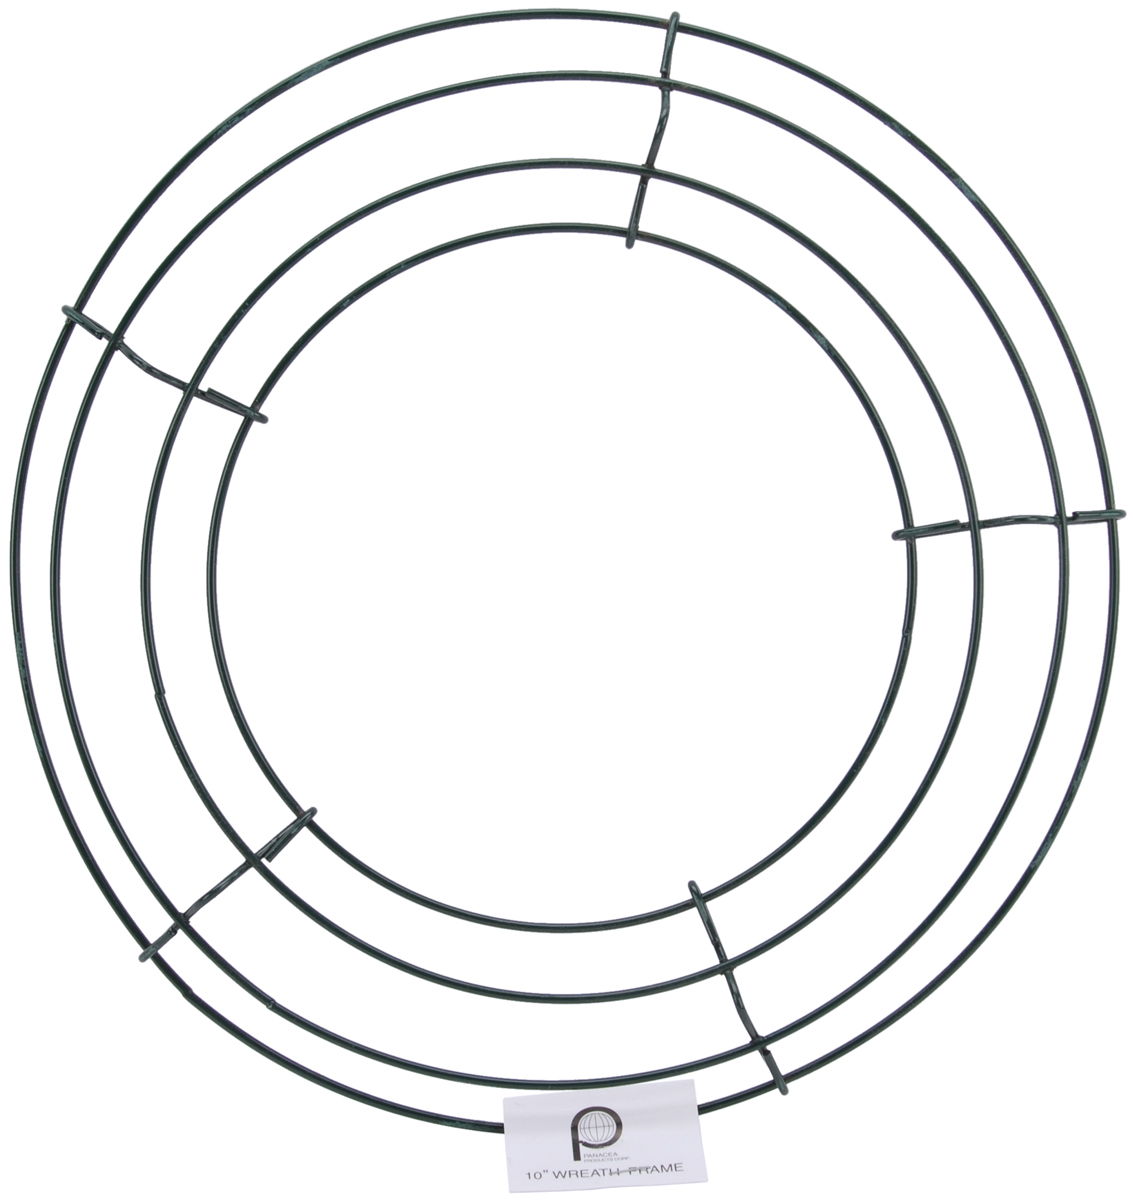 Panacea Drahtkranz Rahmen Draht-Kranz-Rahmen Wire Wreath Frame  